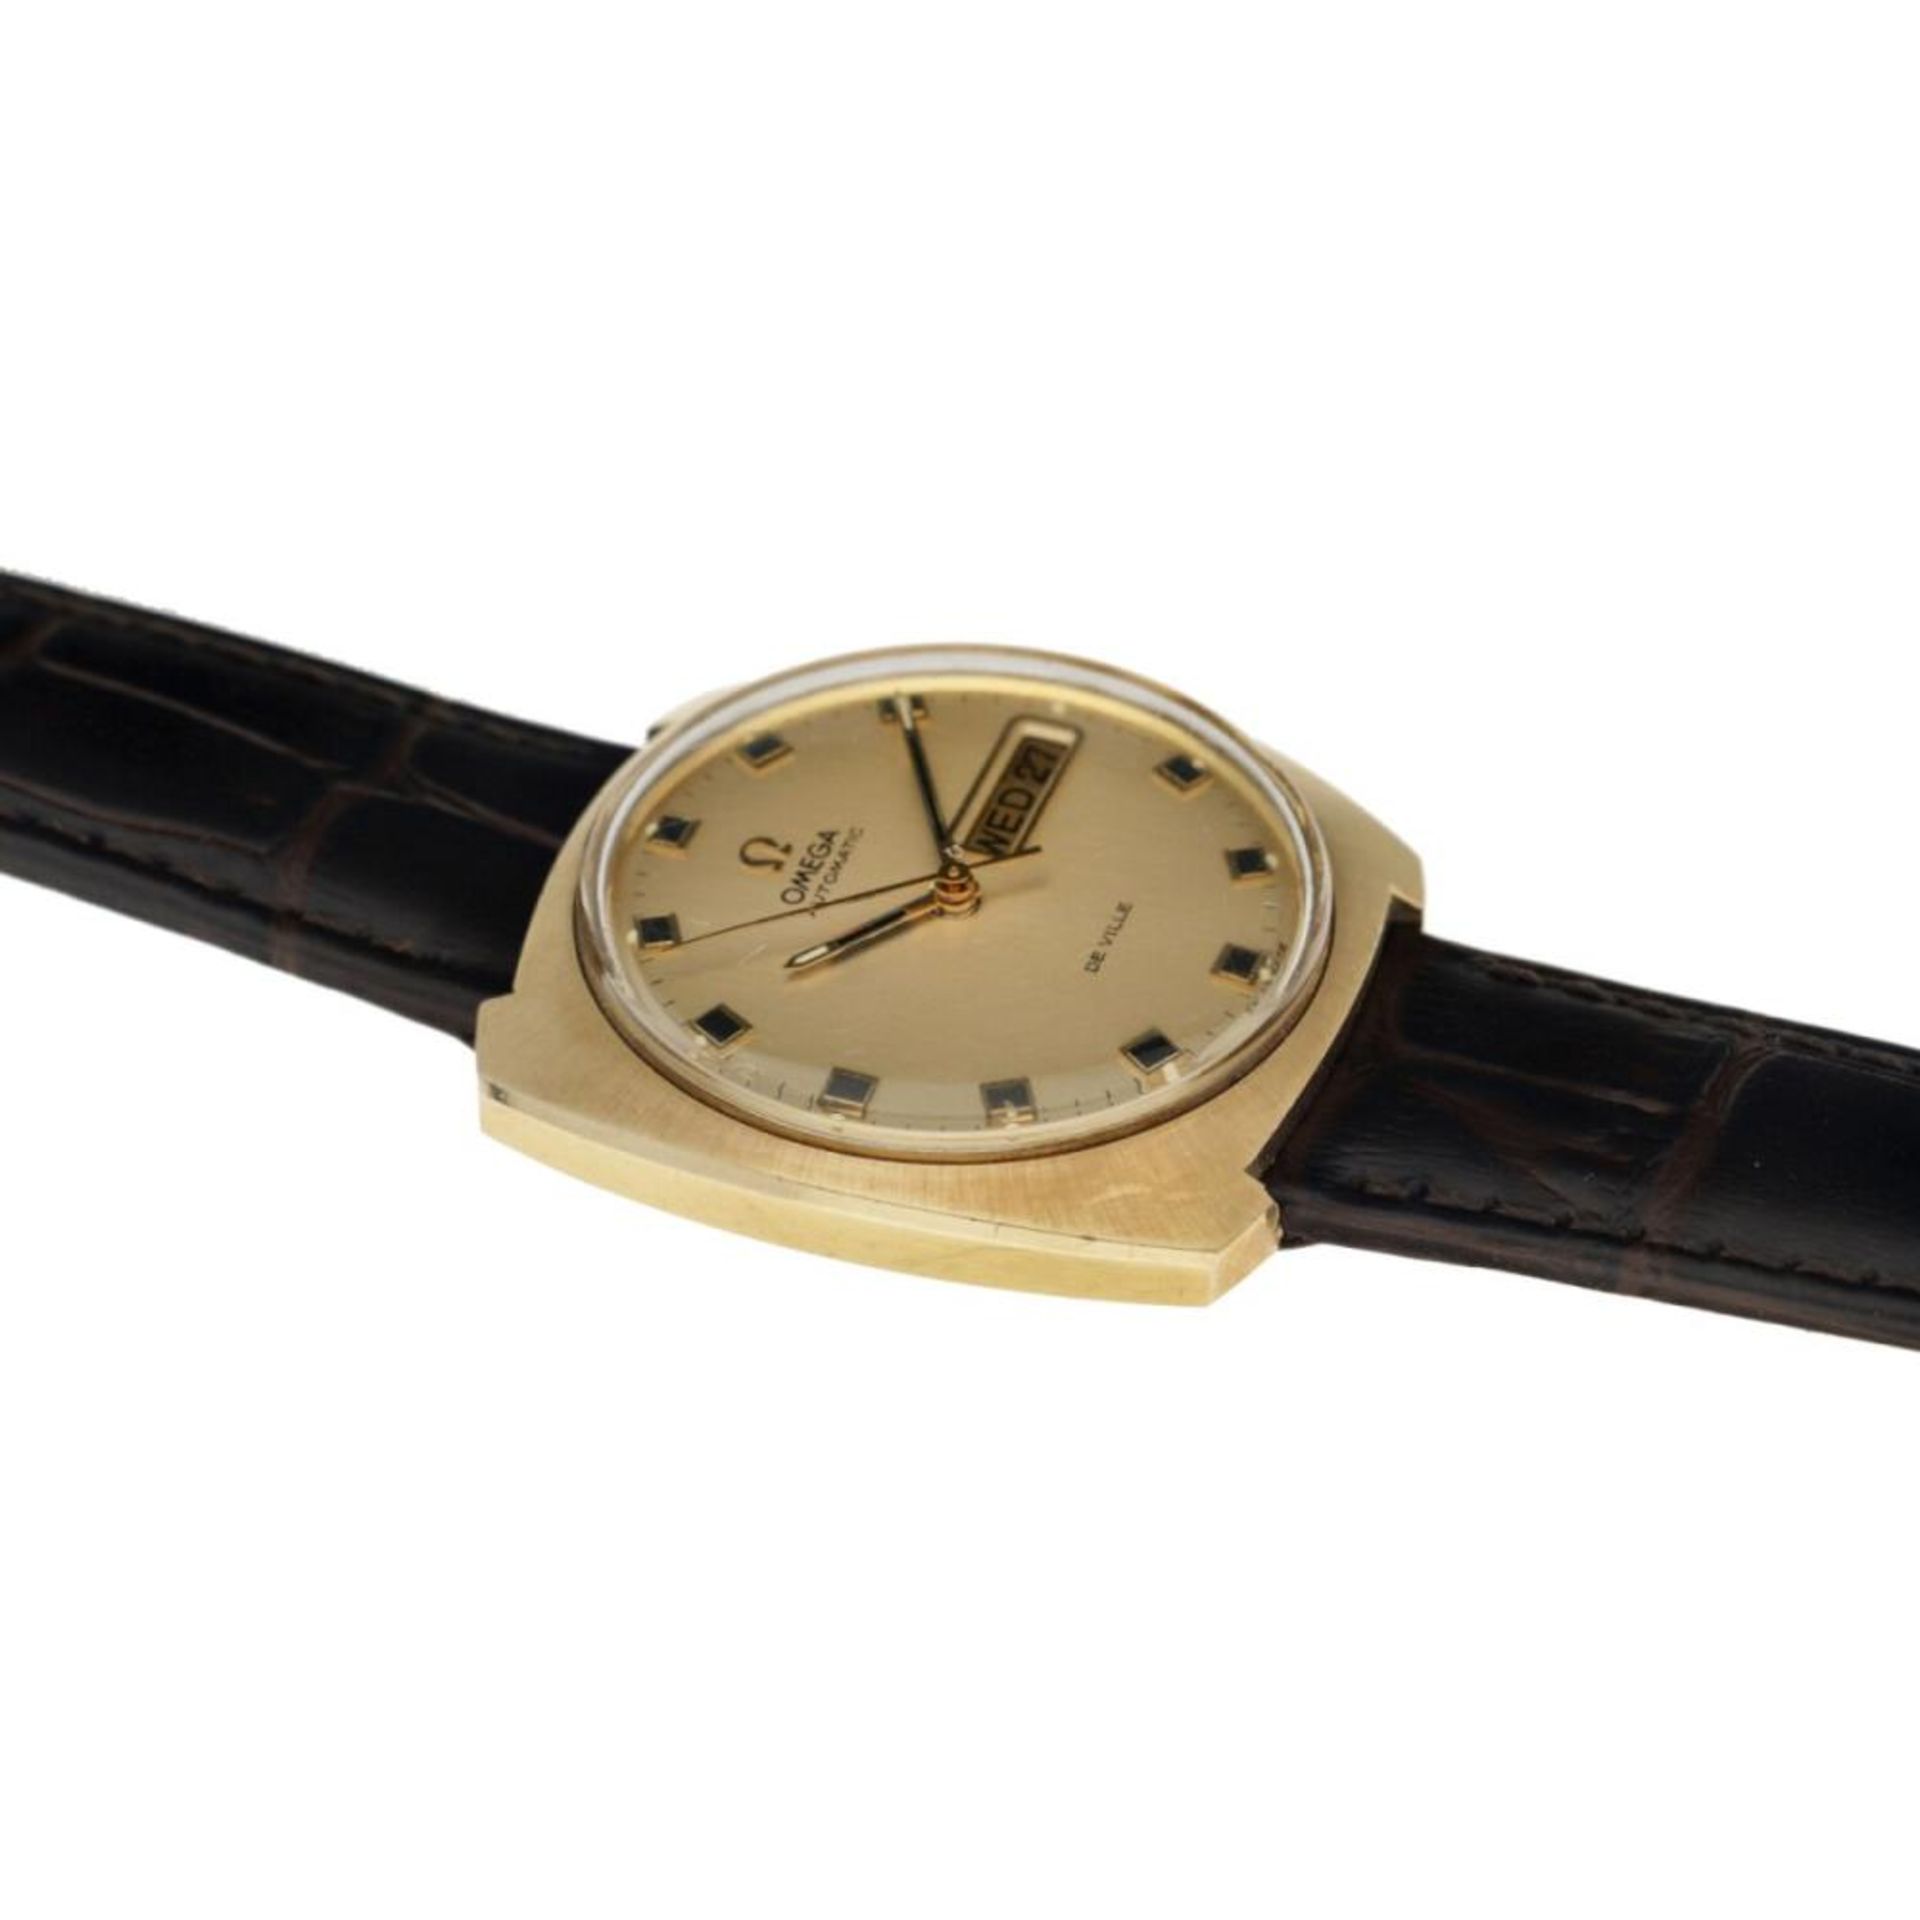 Omega De Ville - Men's watch - approx. 1970. - Image 3 of 6